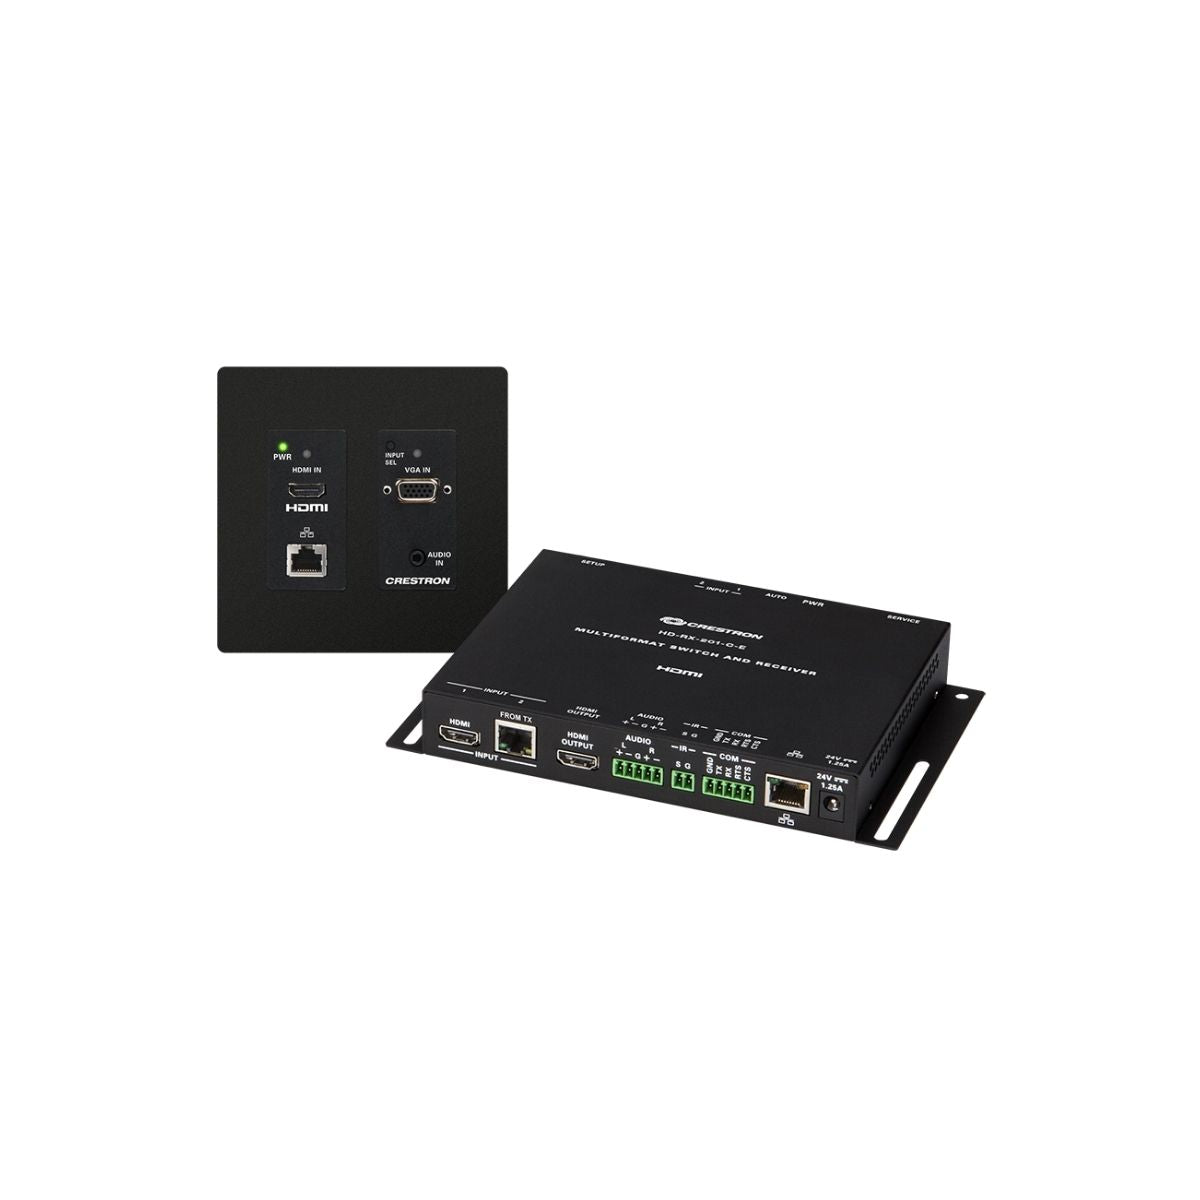 Crestron HD-MD-300-C-E-B DM Lite – HD Scaling Auto-Switcher & HDMI® over CATx Extender 300 w/Wall Plate Transmitter, Black